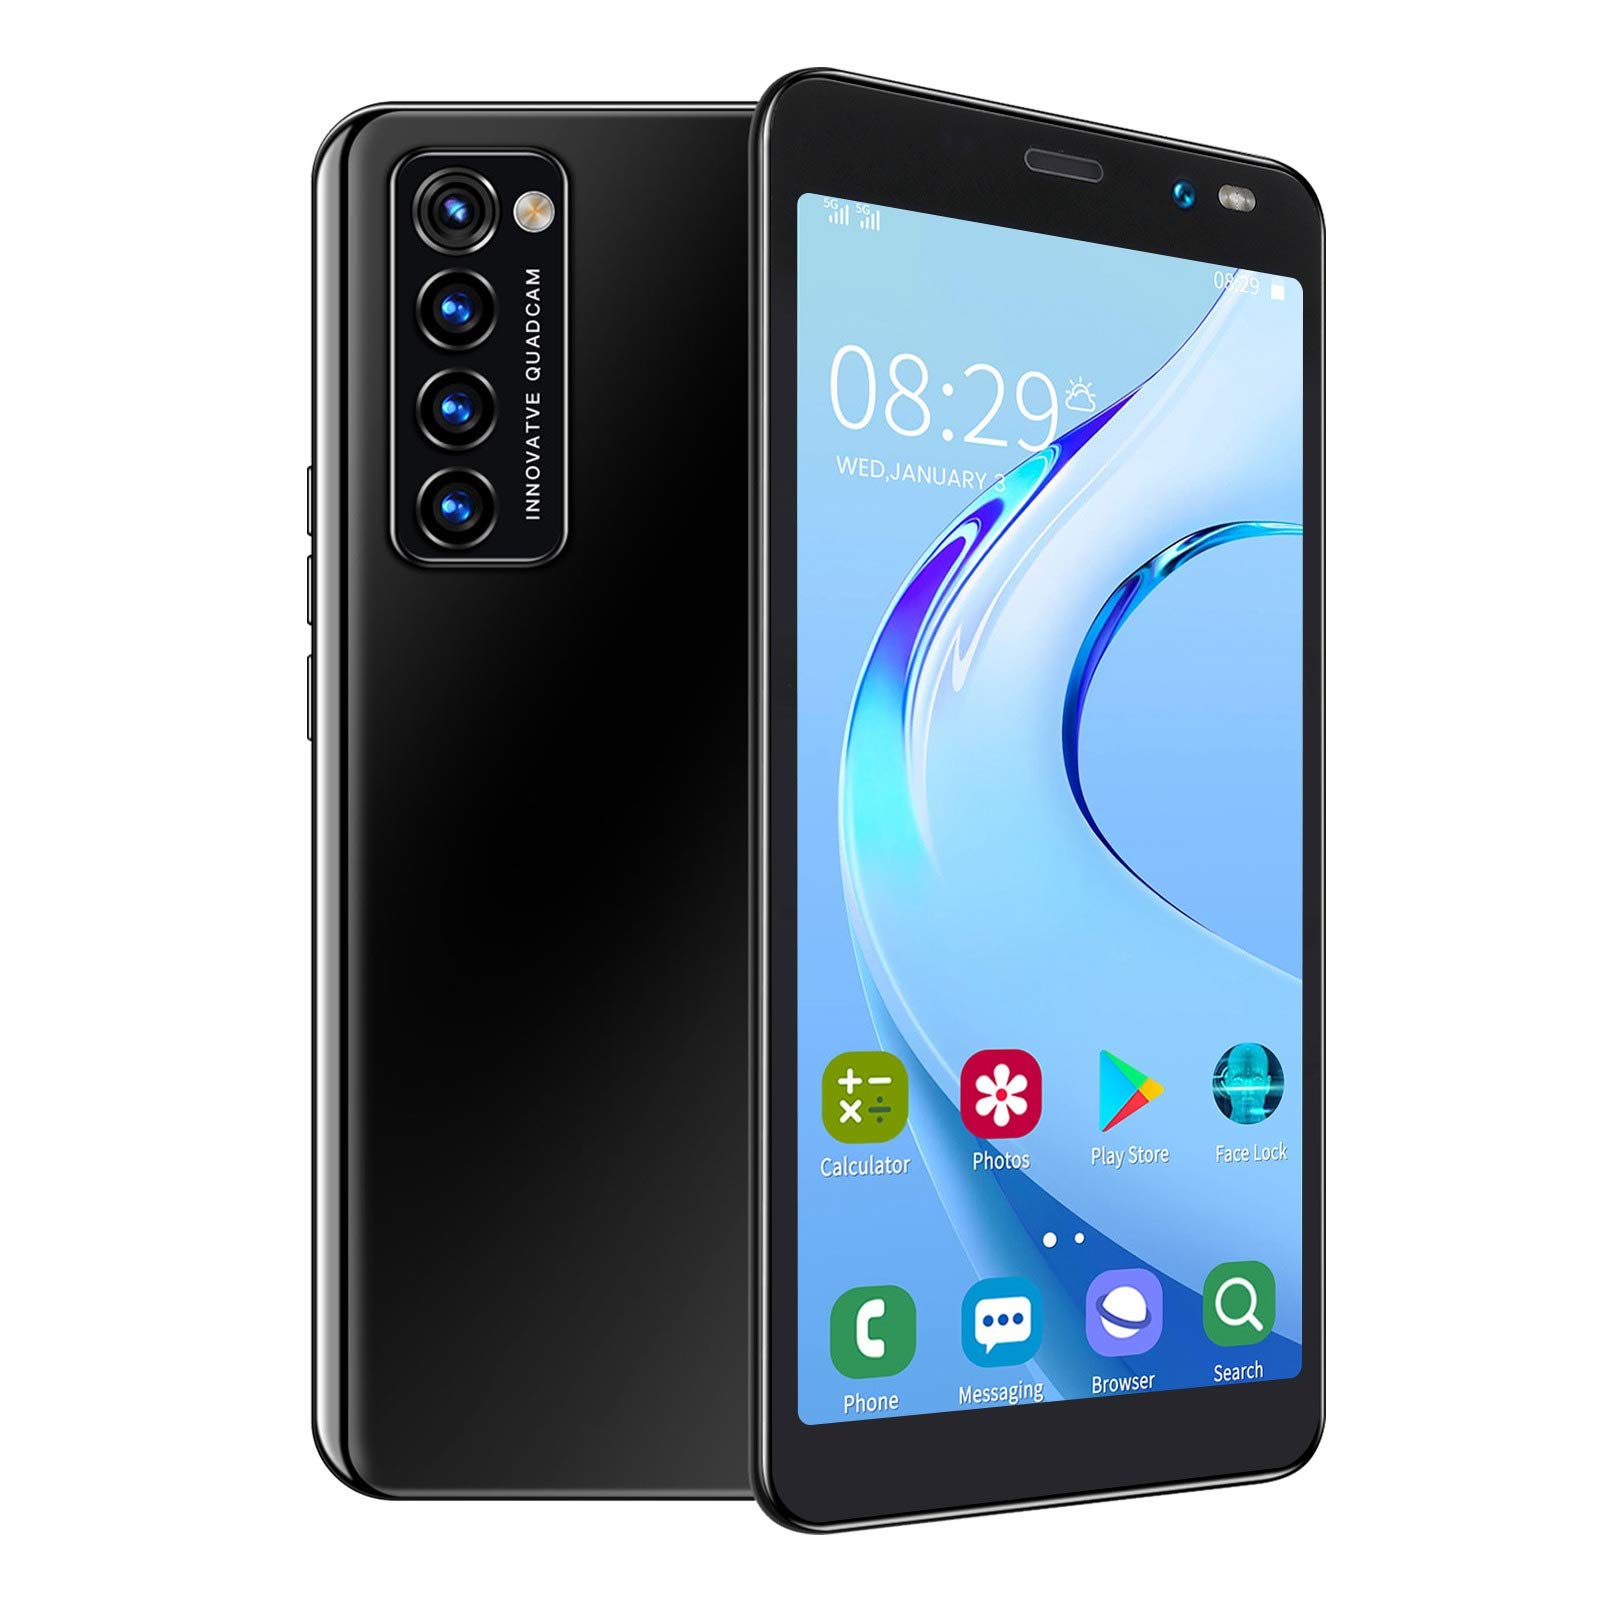 Smartphone Android,LANDVO Rino4 Pro Smartphone ohne Vertrag 5,45 Zoll Dual SIM Android Handy,1 GB RAM + 8 GB ROM,Face ID,2200mAh Akku Black